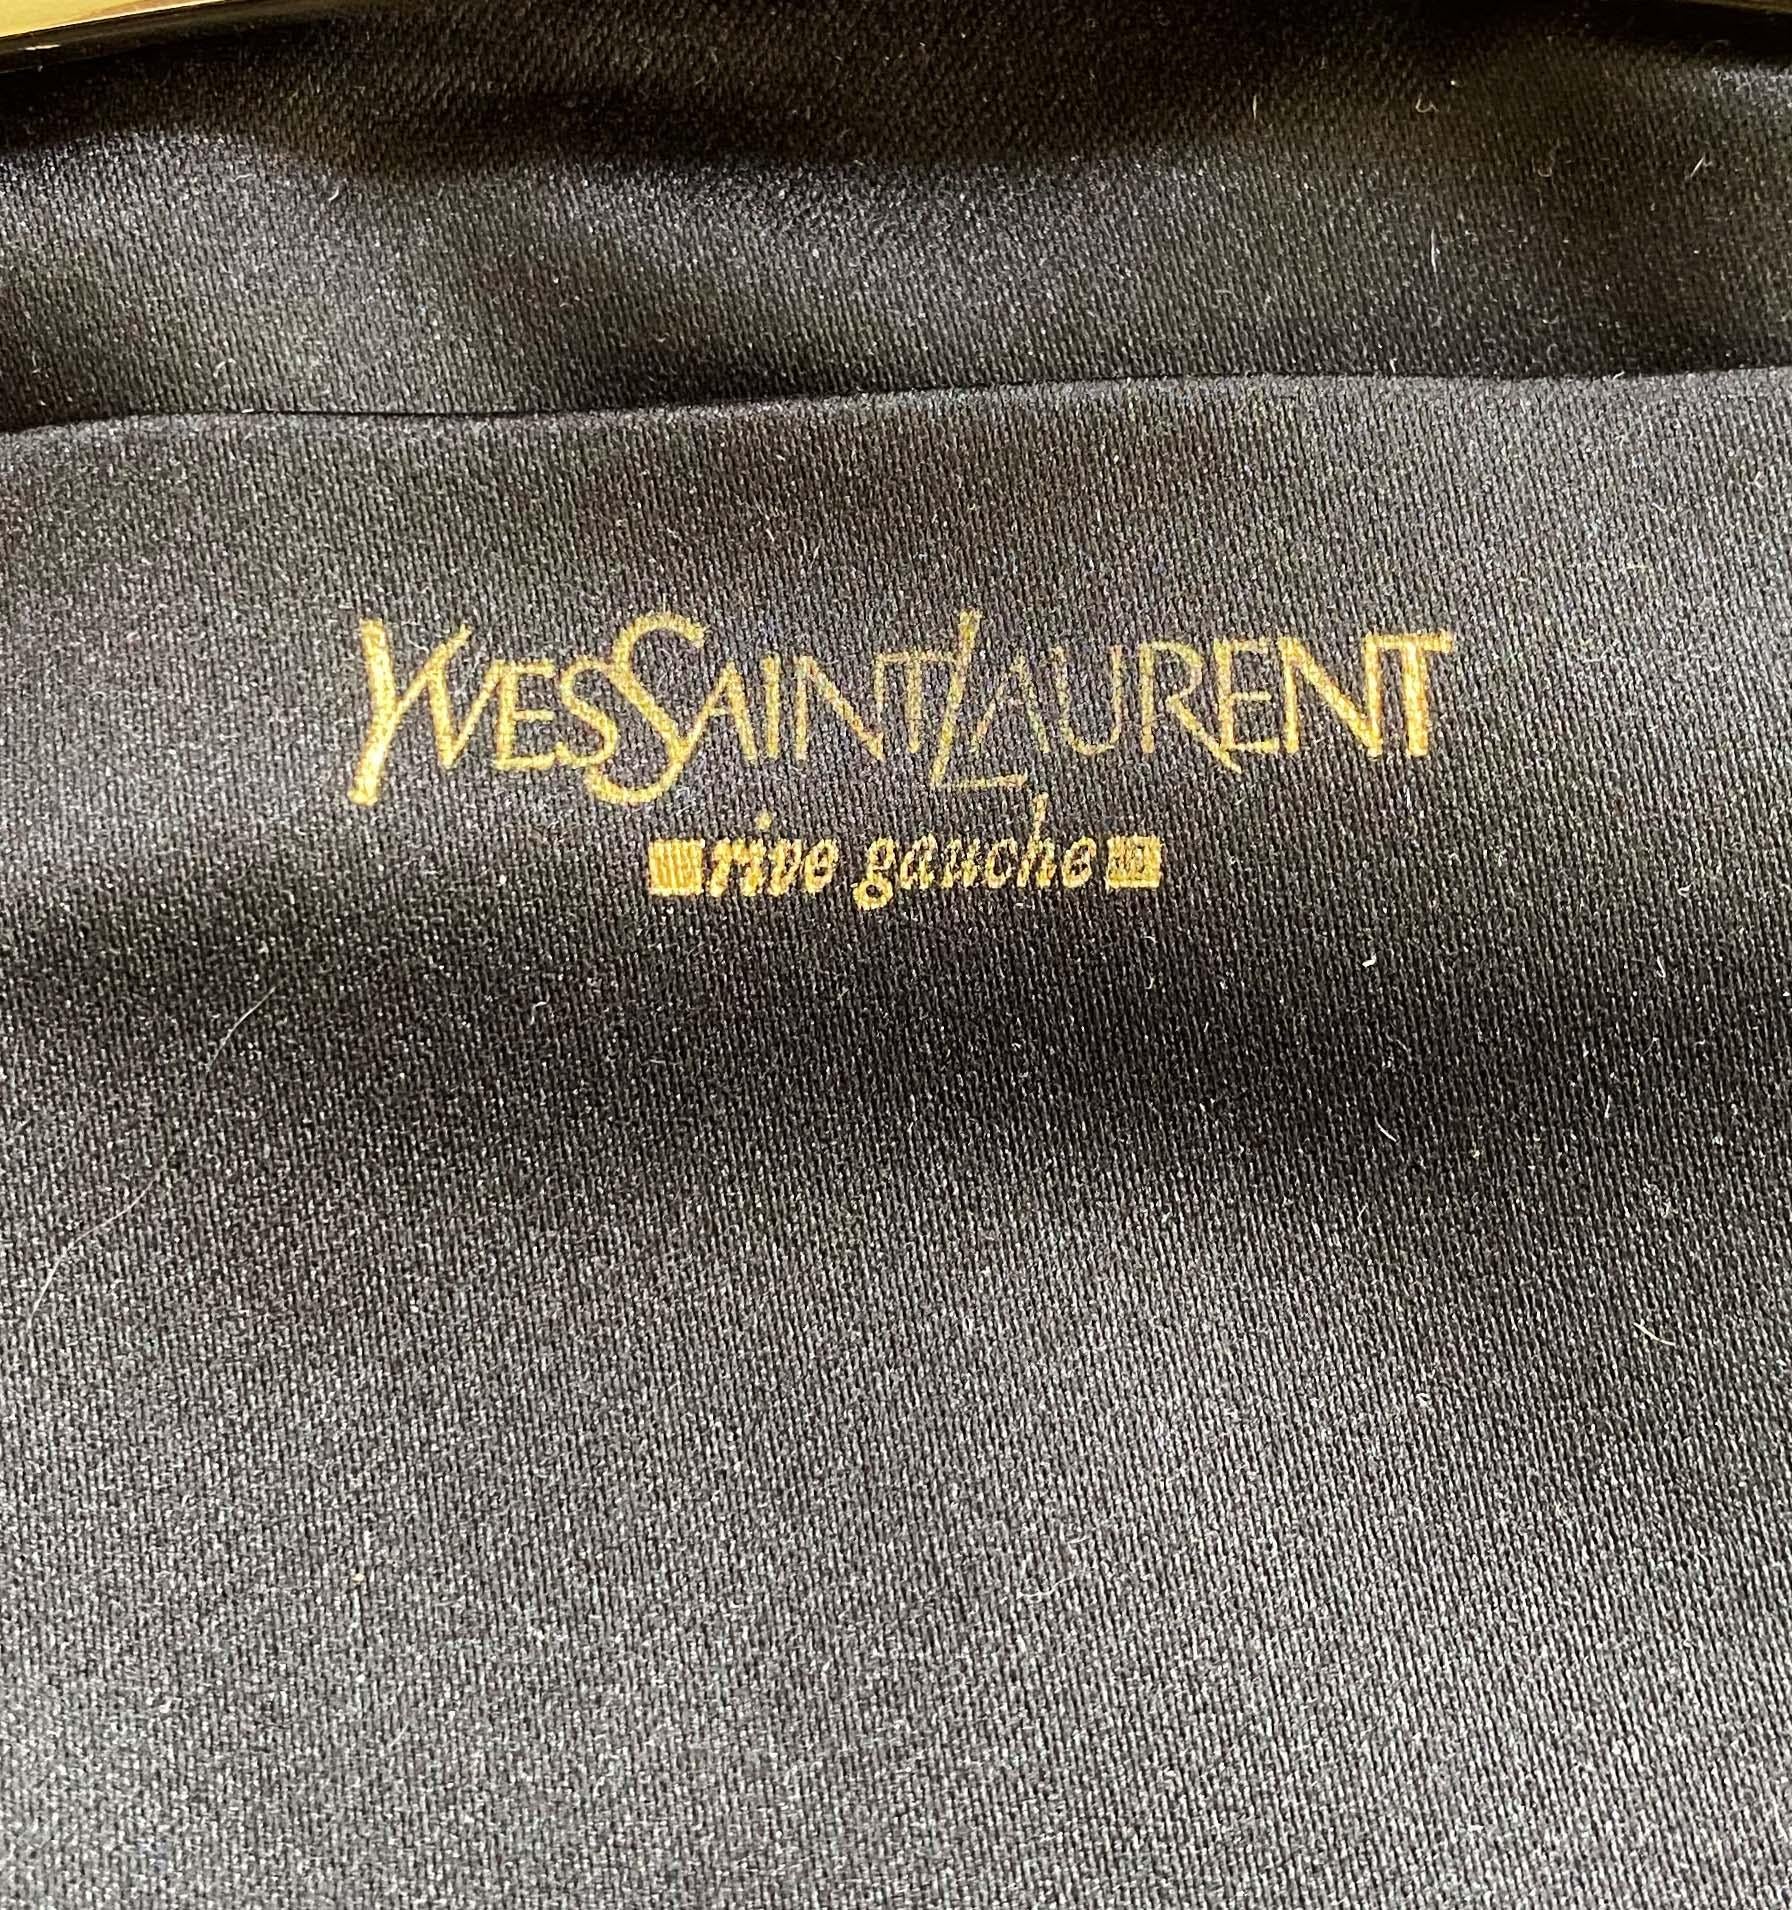 S/S 2004 Yves Saint Laurent by Tom Ford Rhinestone Flower Silk Satin Clutch  For Sale 1